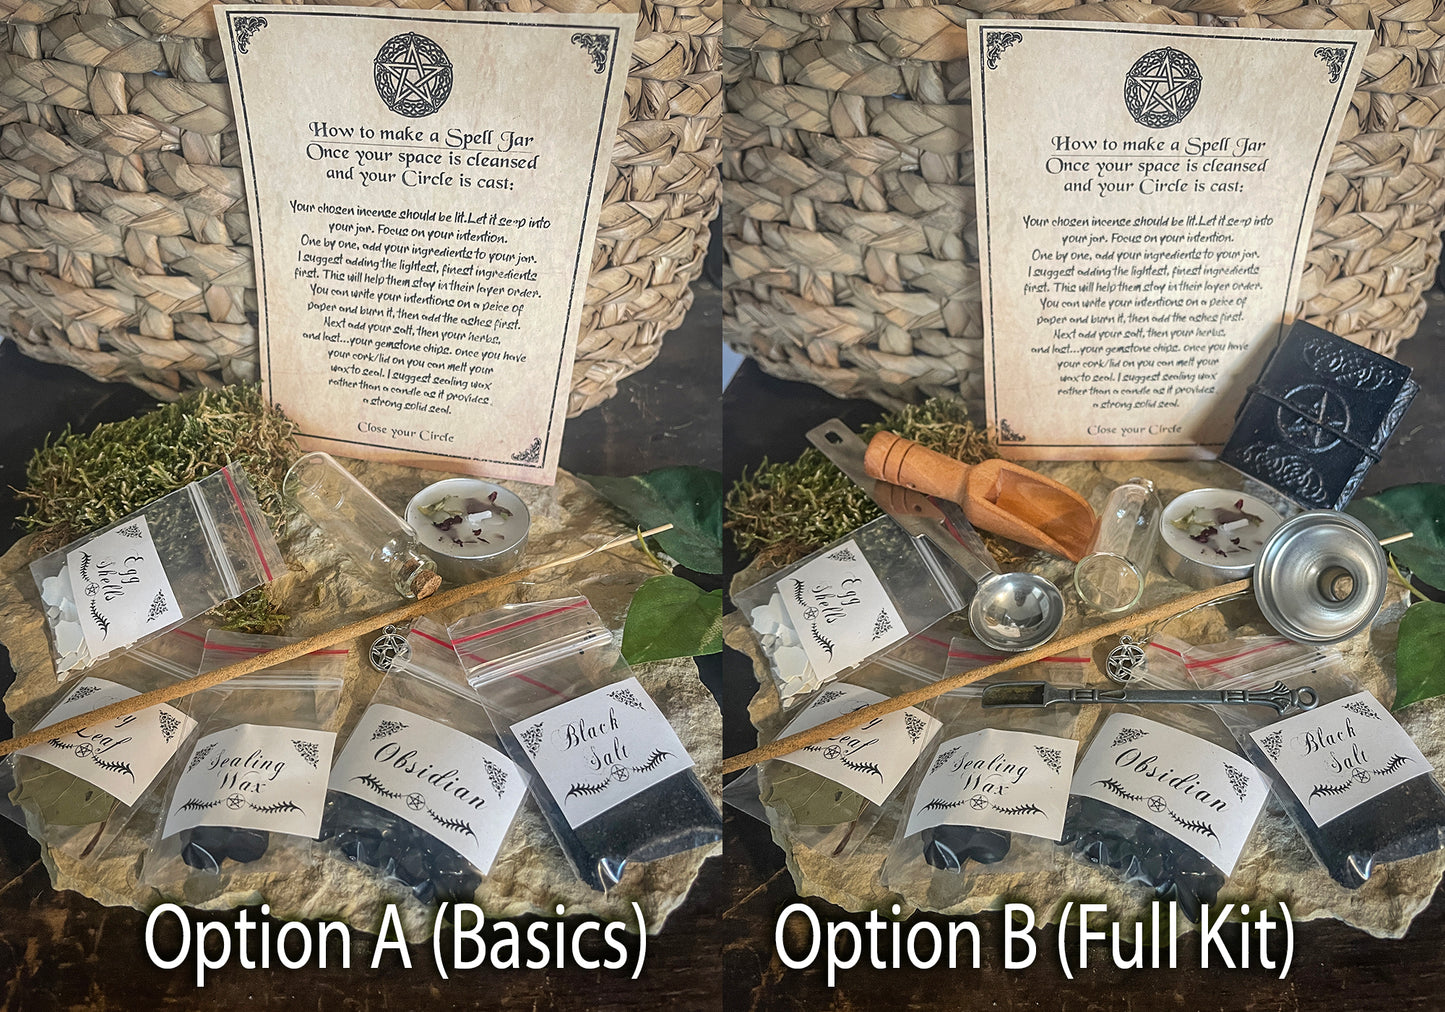 Spell Jar Manifestation Kit with Instructions